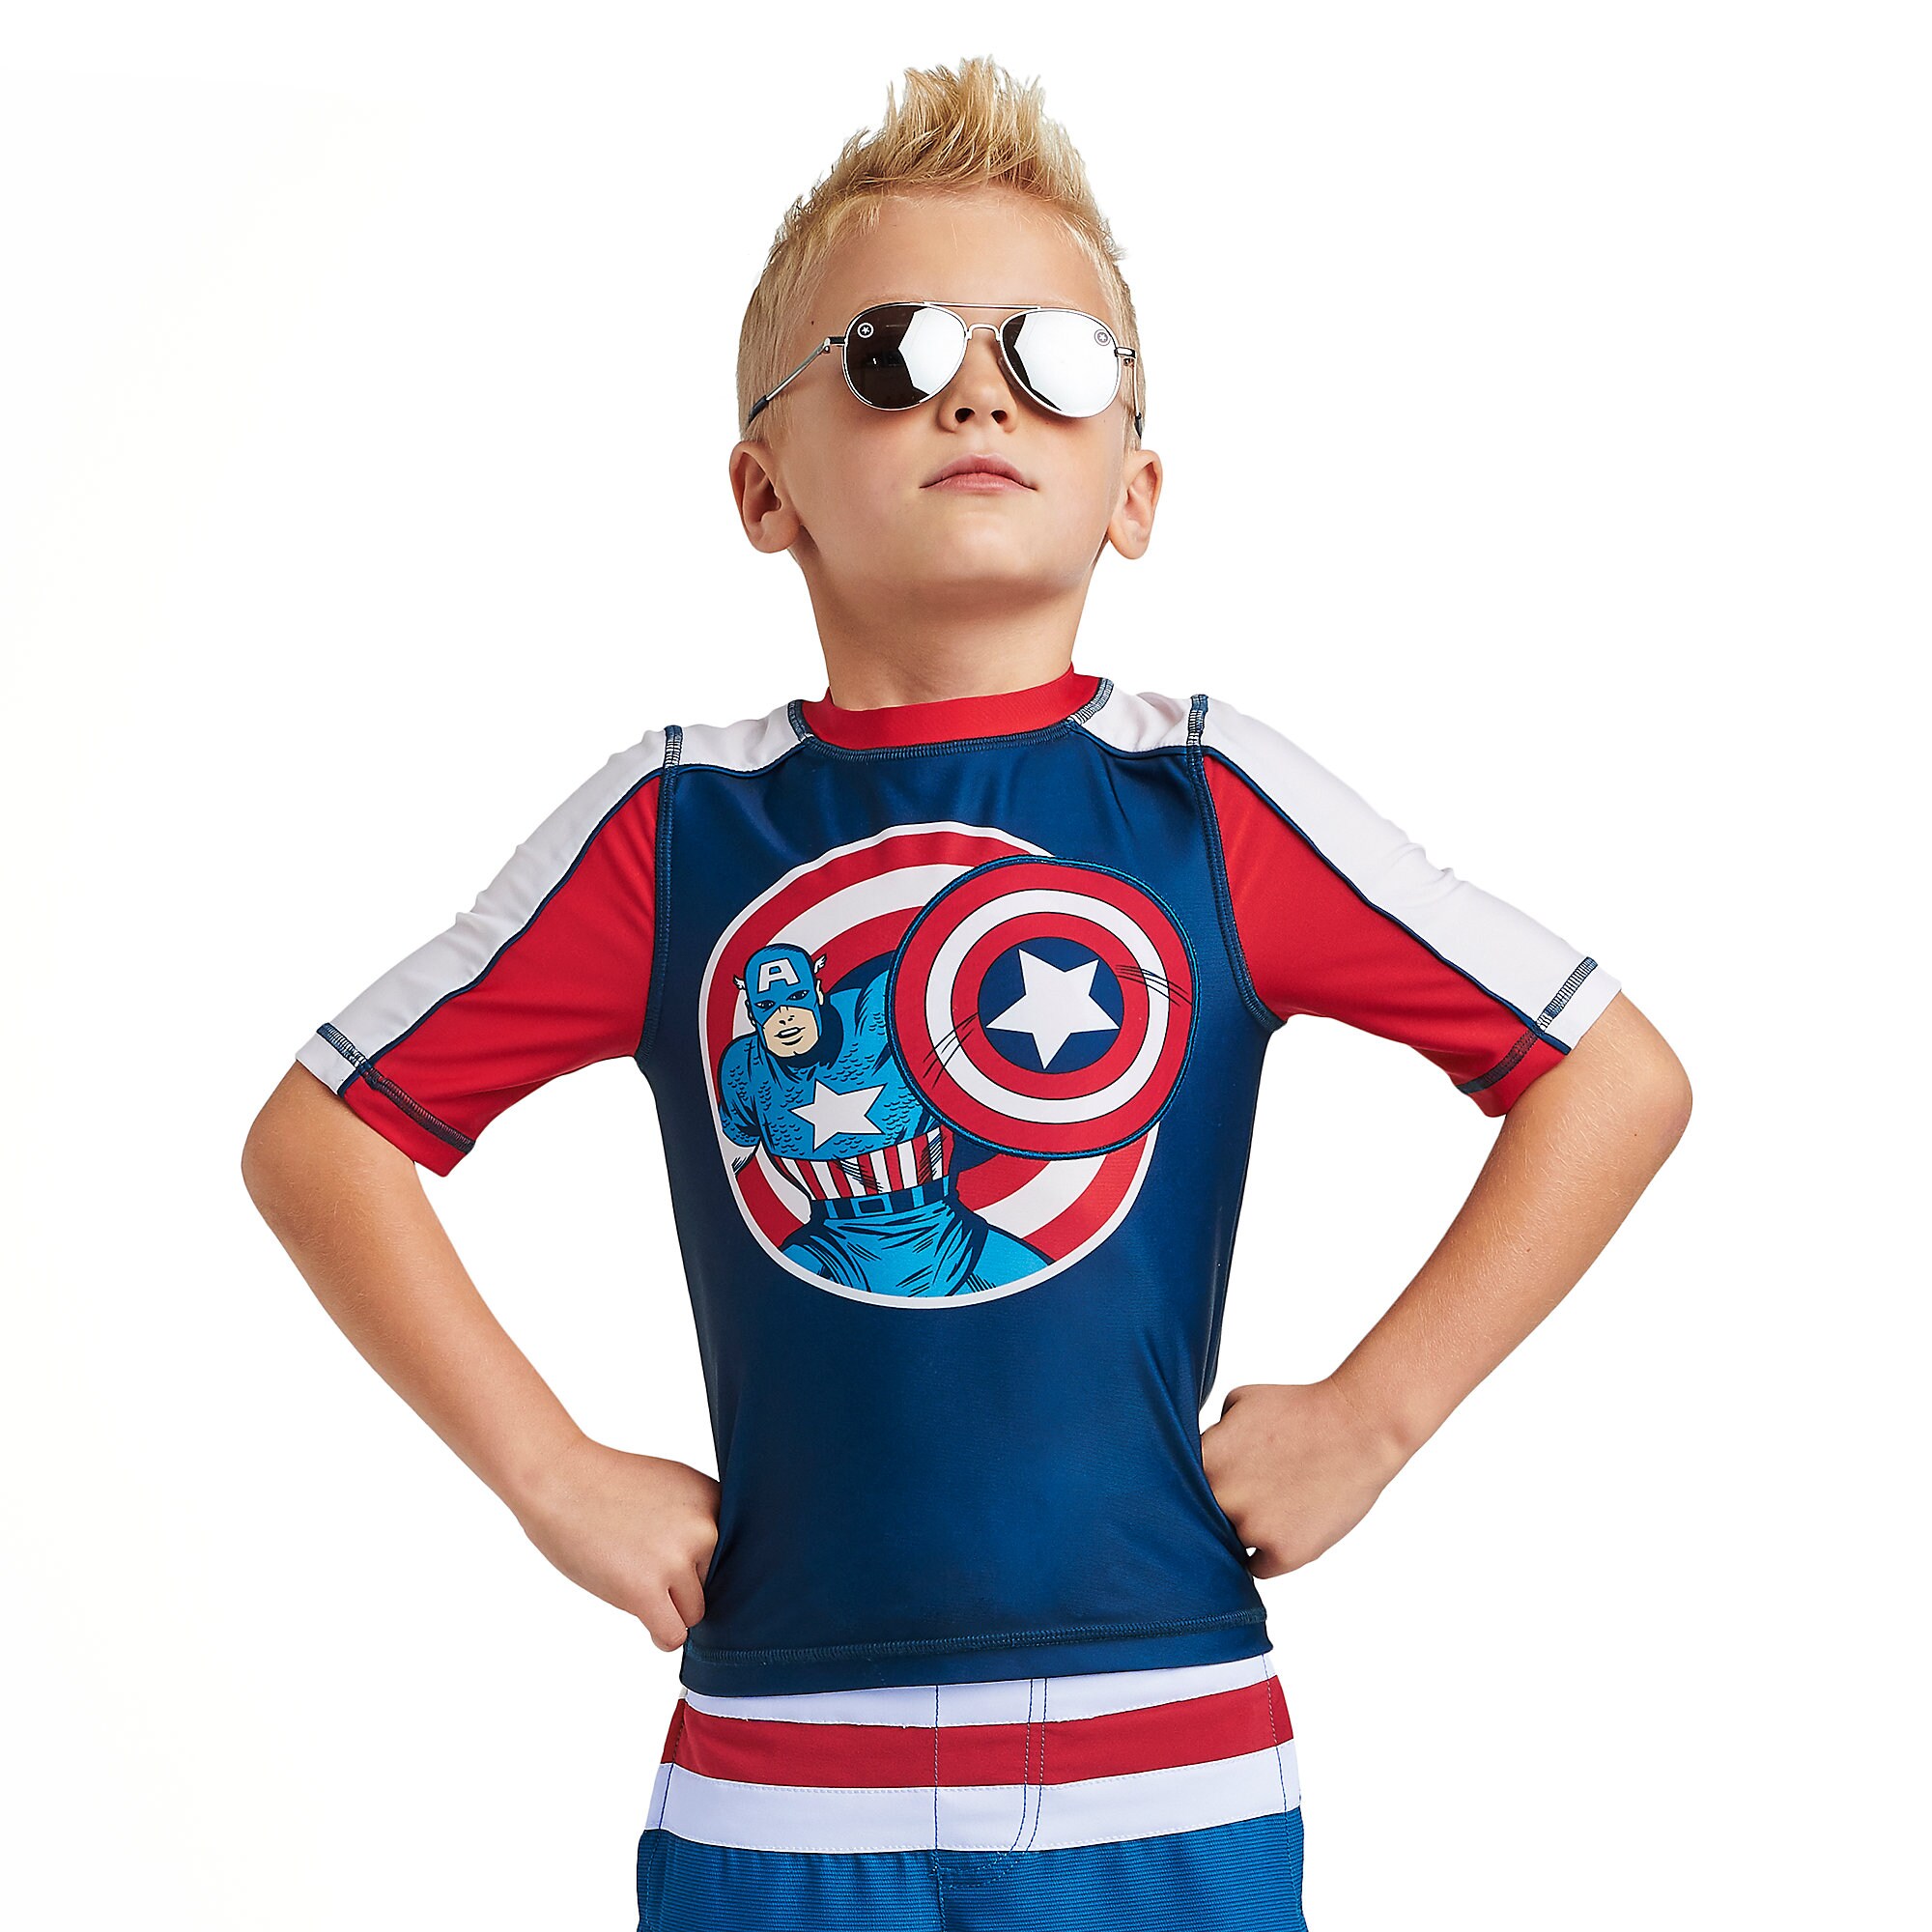 Captain America Rash Guard for Kids